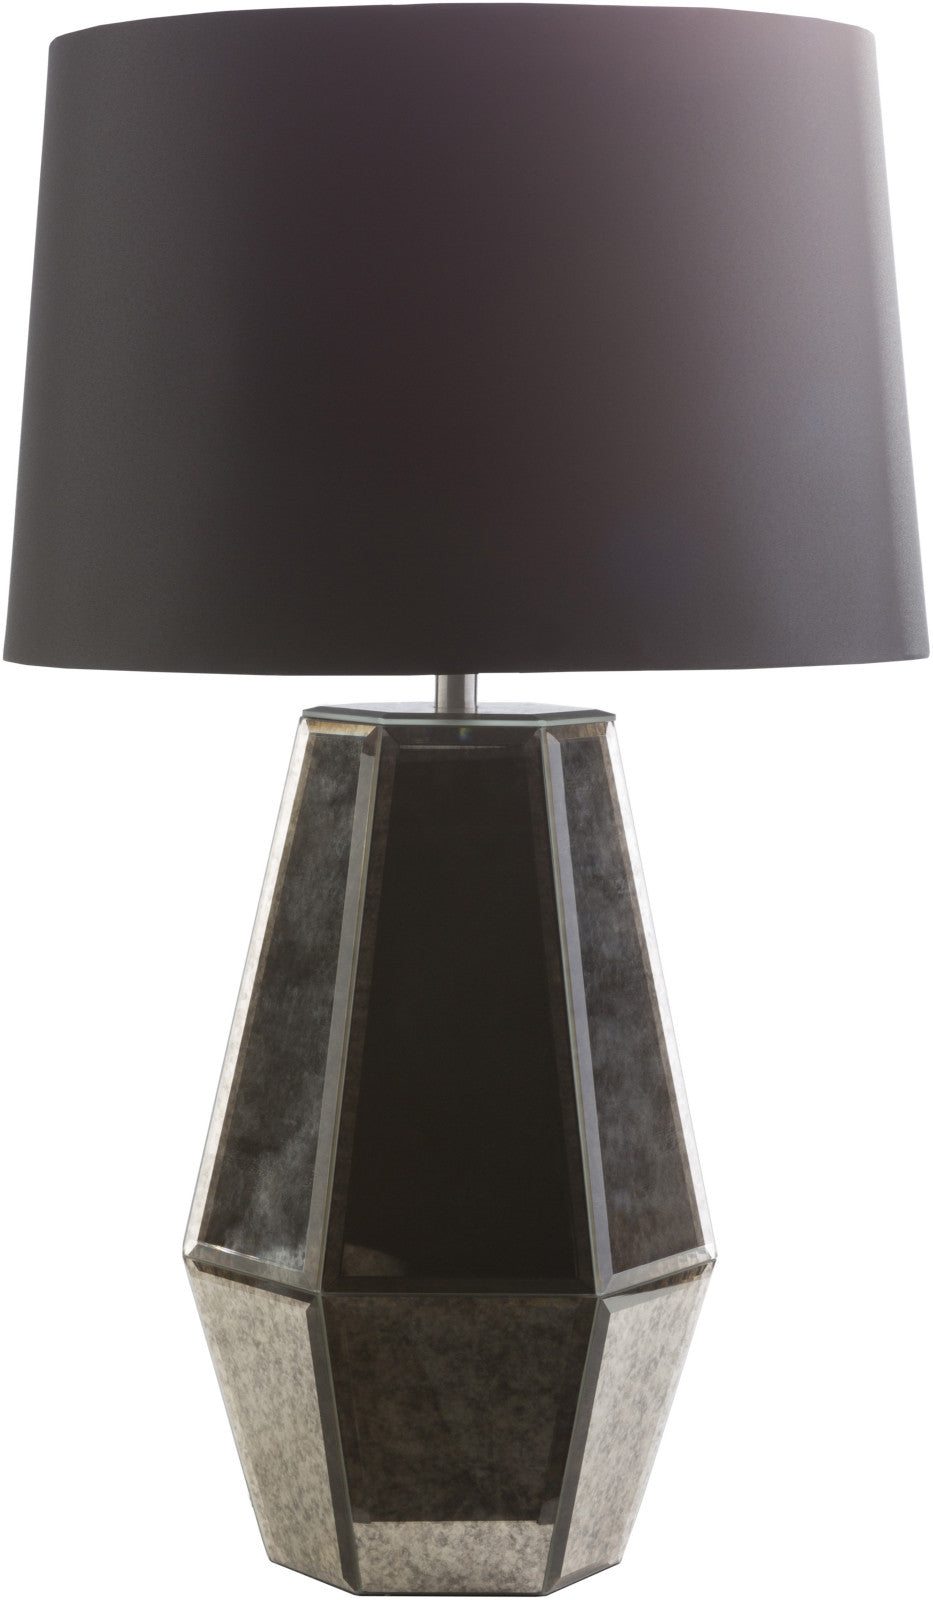 Surya Ryden RYD-459 Black Lamp Table Lamp